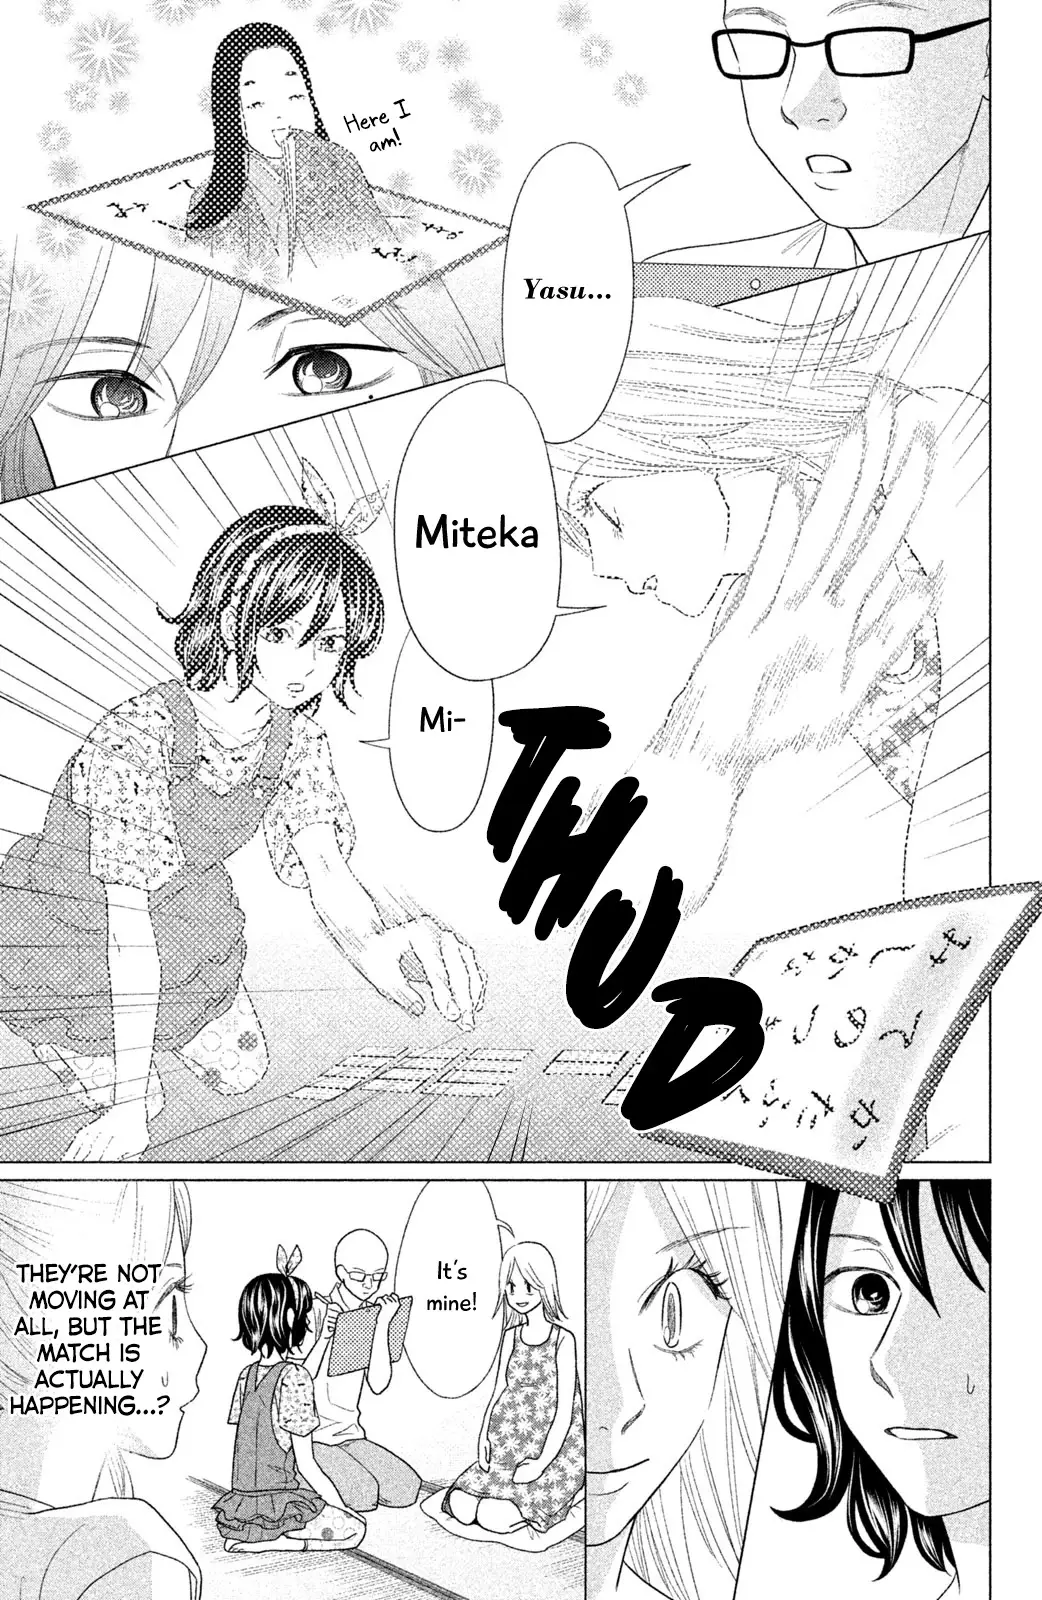 Chihayafuru: Middle School Arc - 12 page 12